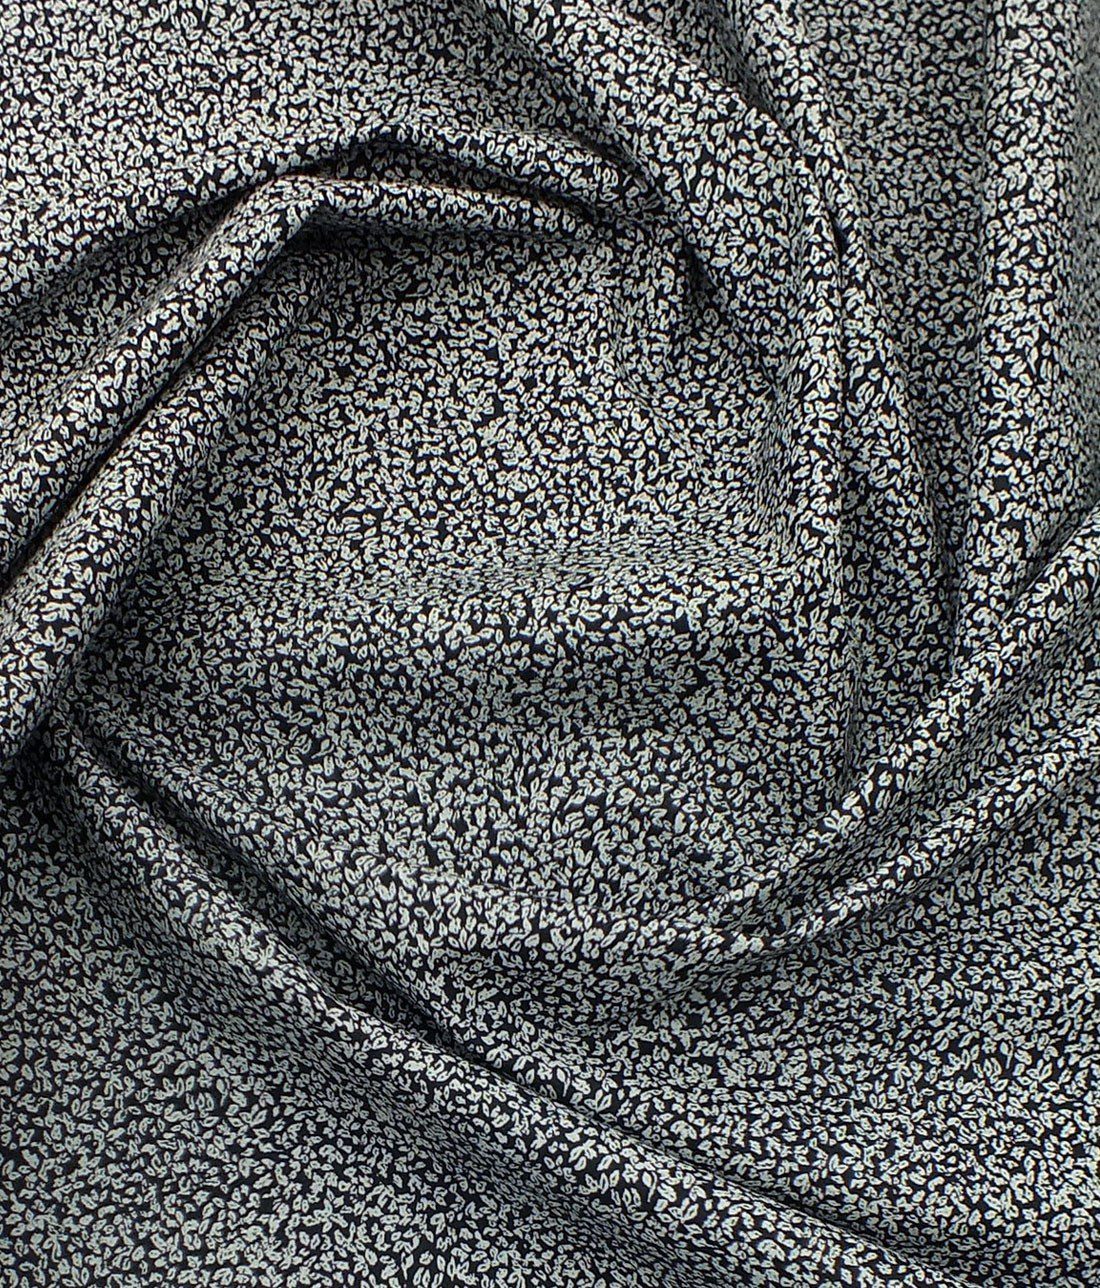 Cadini by Siyaram's Men's Black & White Floral Cotton Printed Shirt Fabric